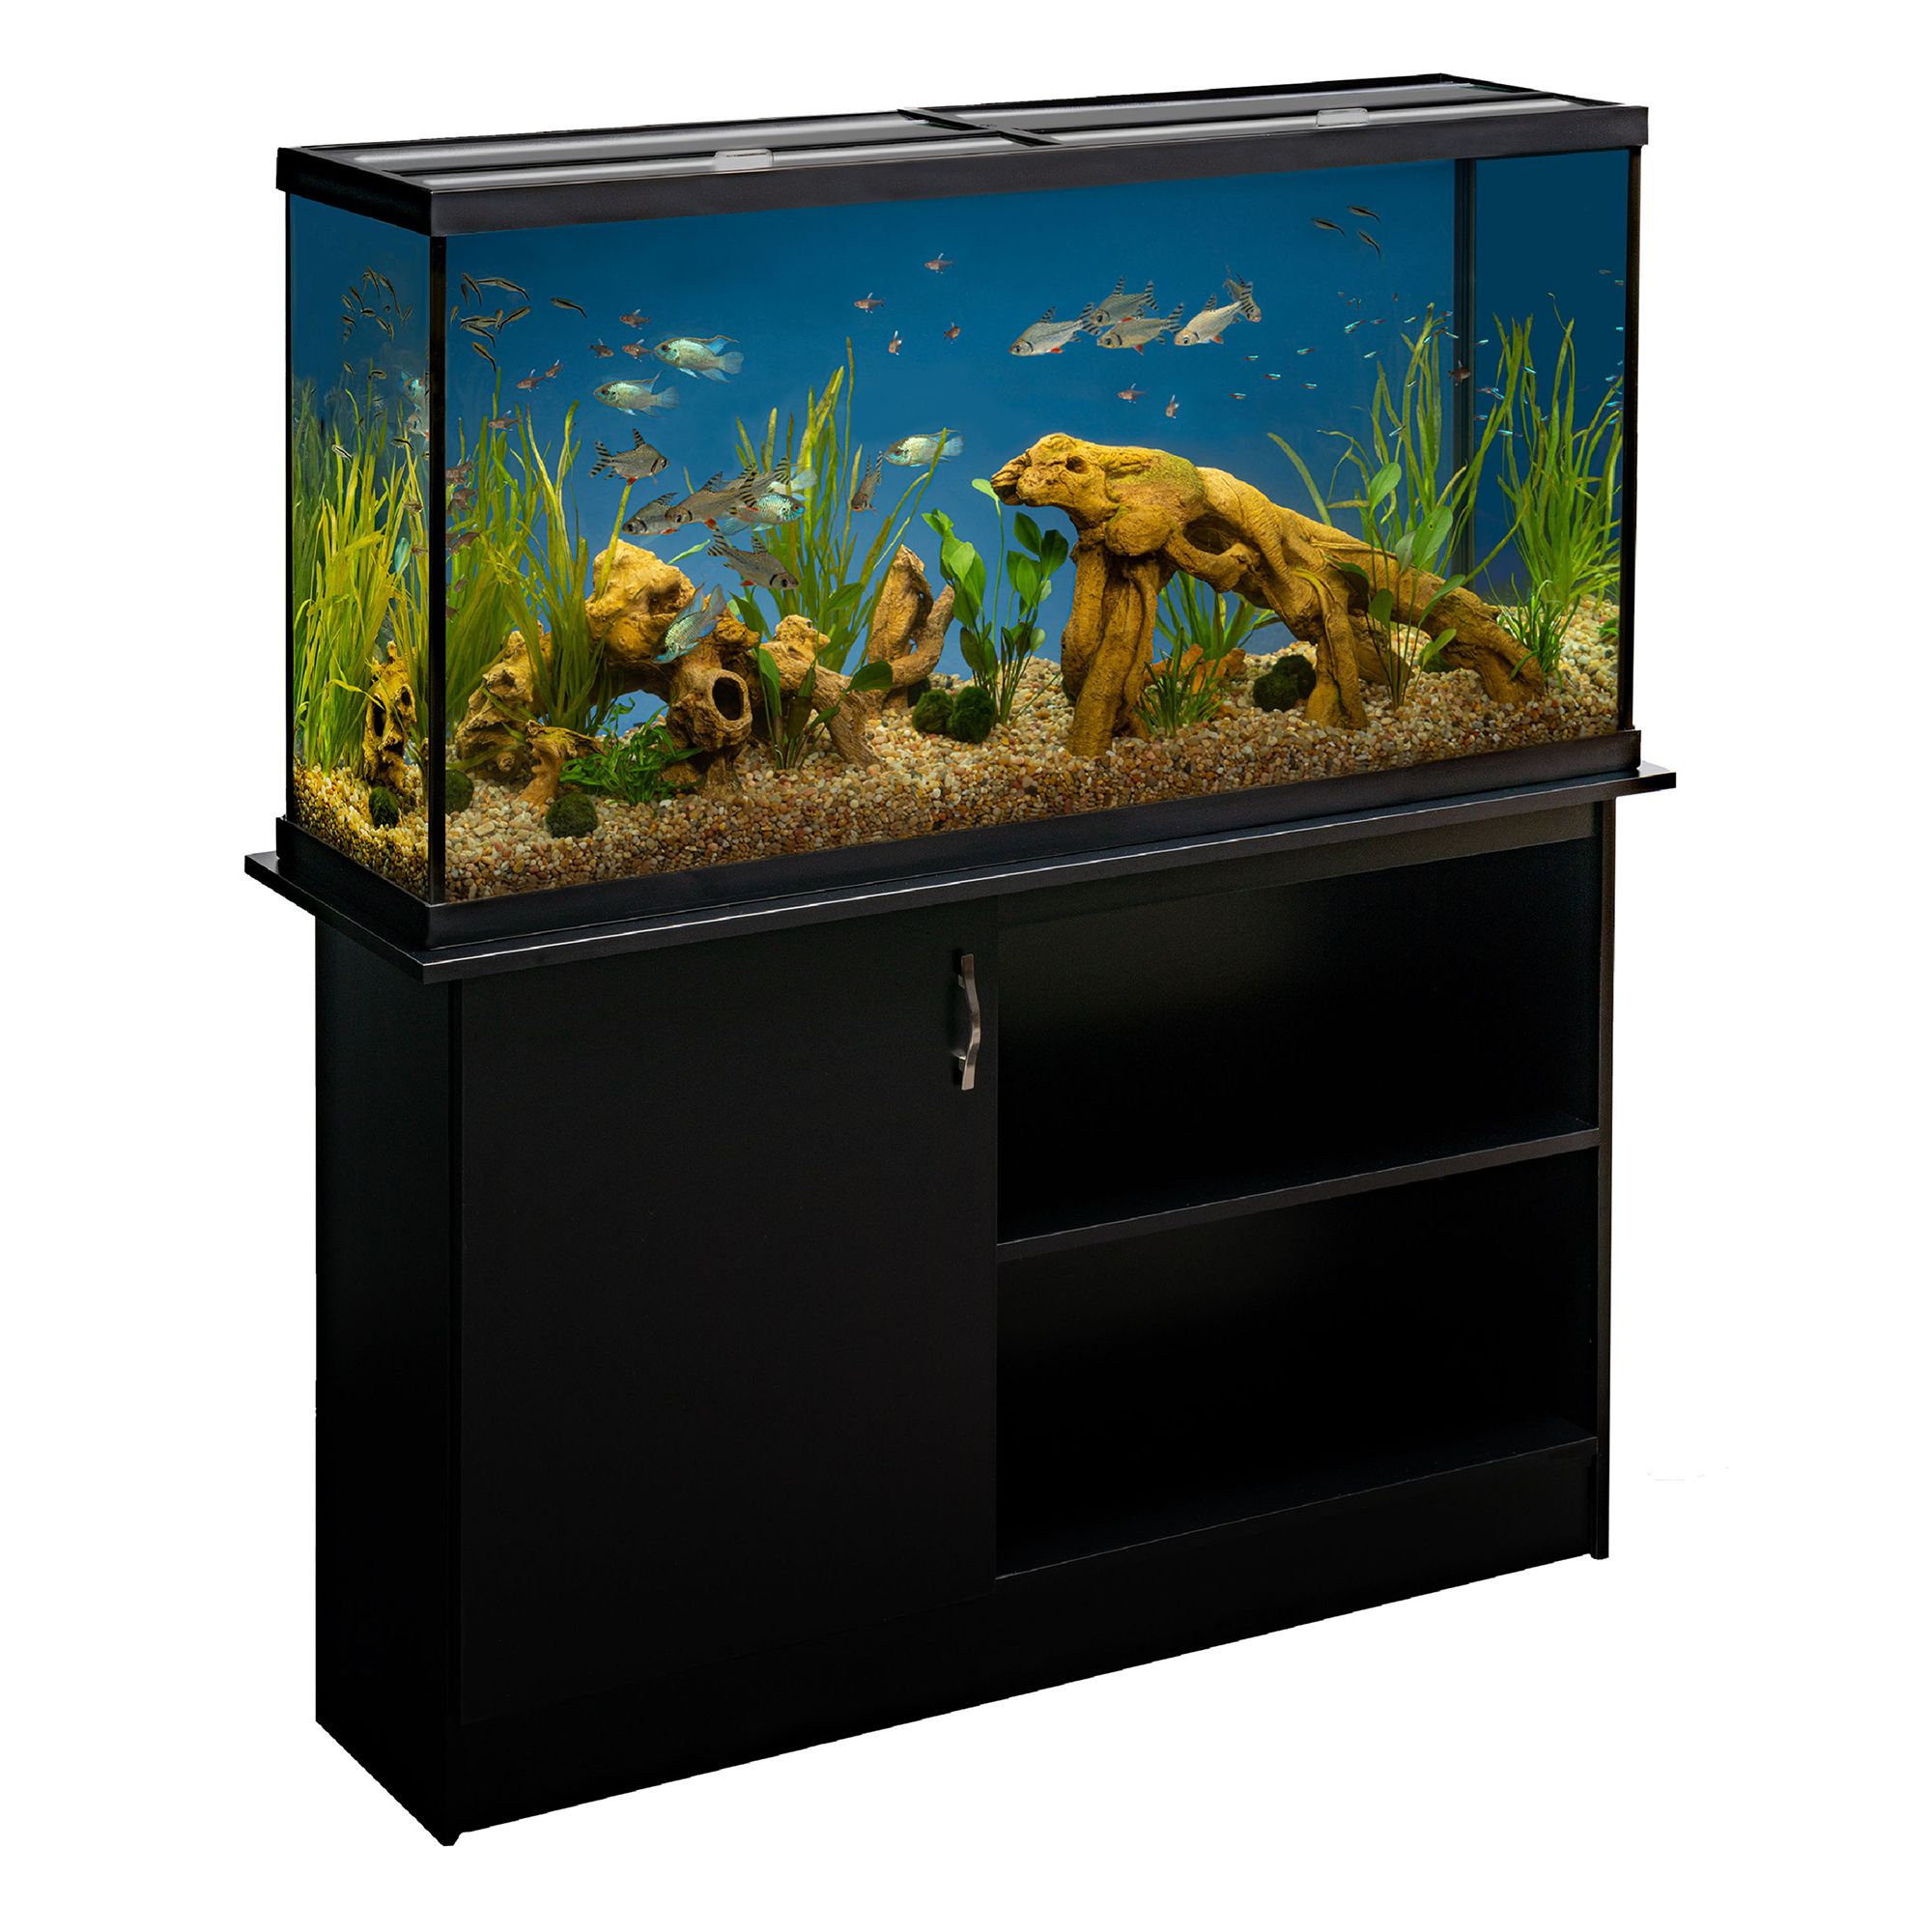 PetSmart: Marineland 60 Gallon Aquarium w/ Stand Only $179.99